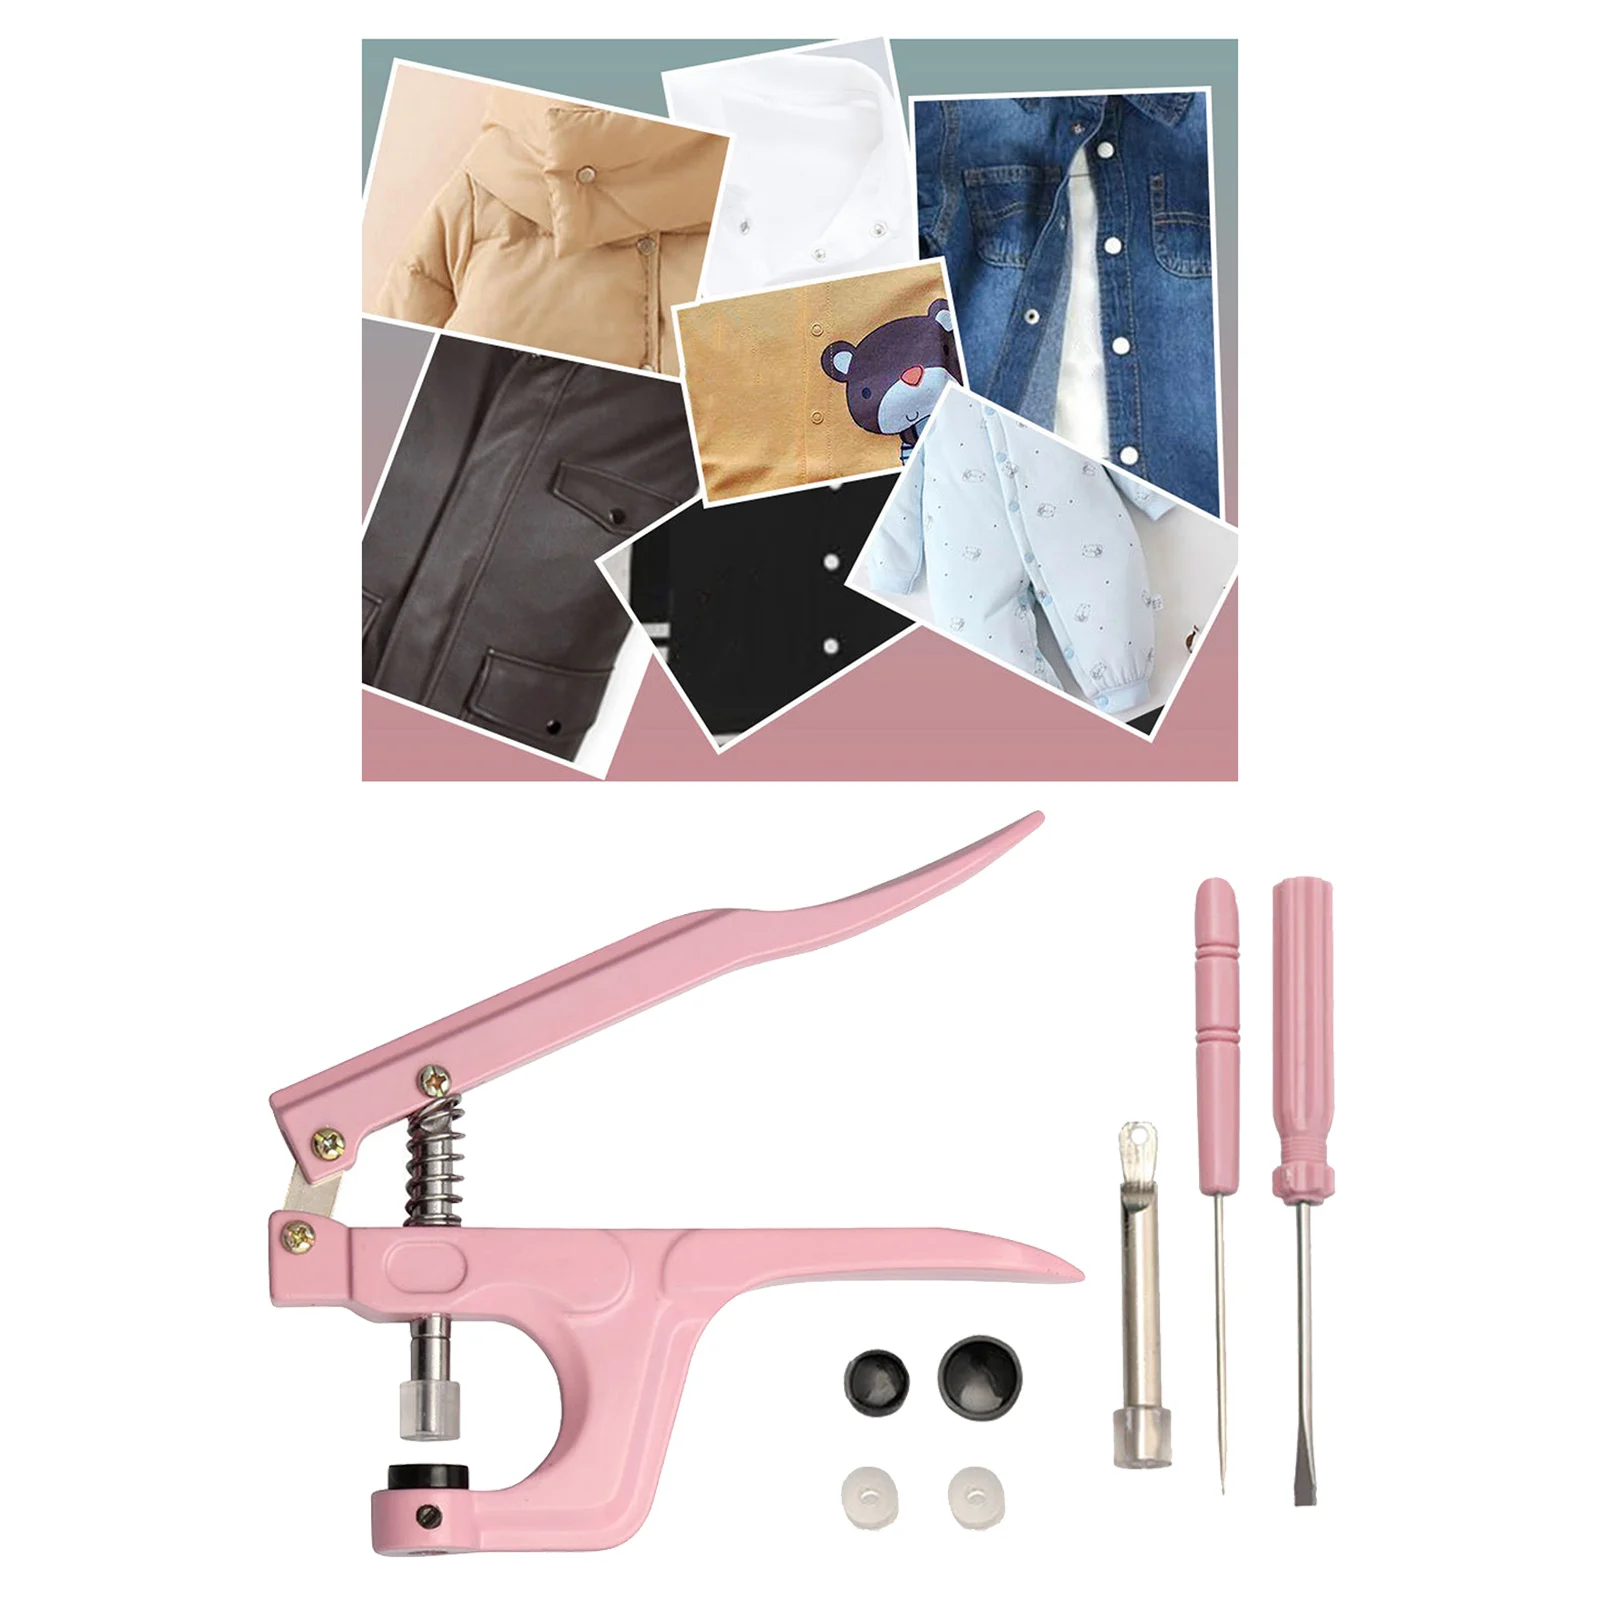 Snap Fastener Pliers for Sewing Clothing Crafting Bibs Fastening Replacing Repairing